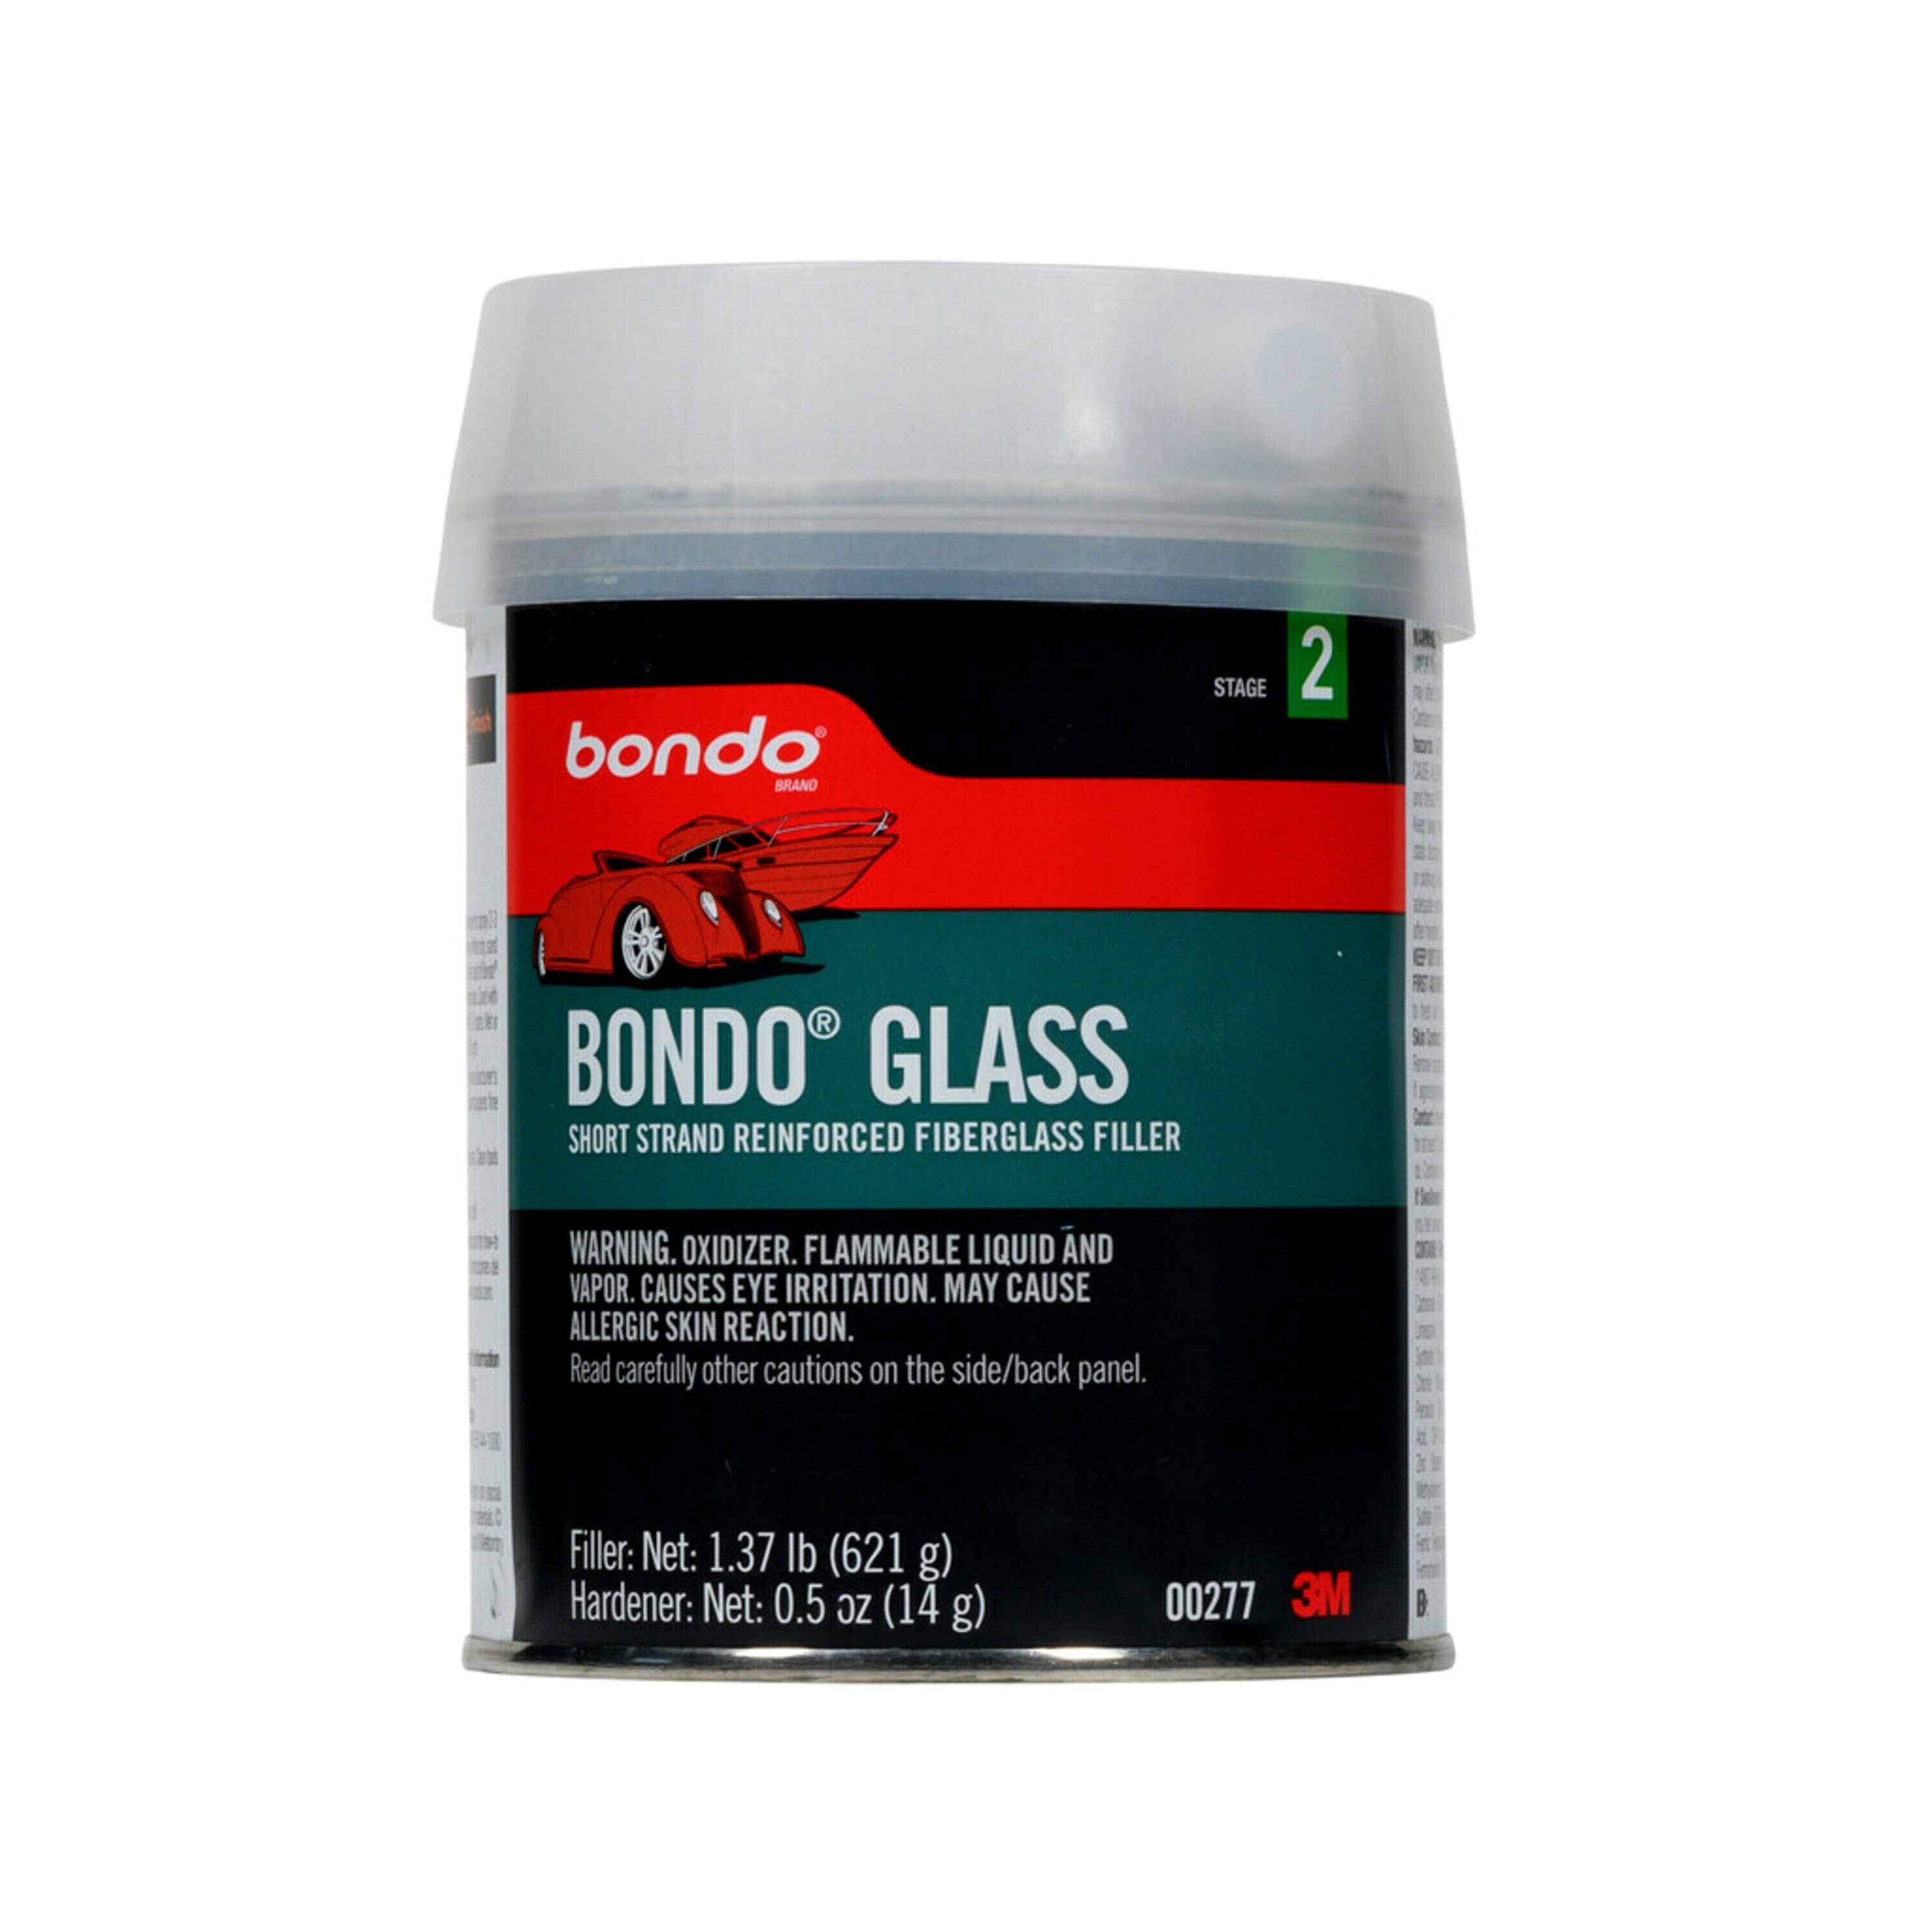 Bondo Glass Single Use, 7.05 oz